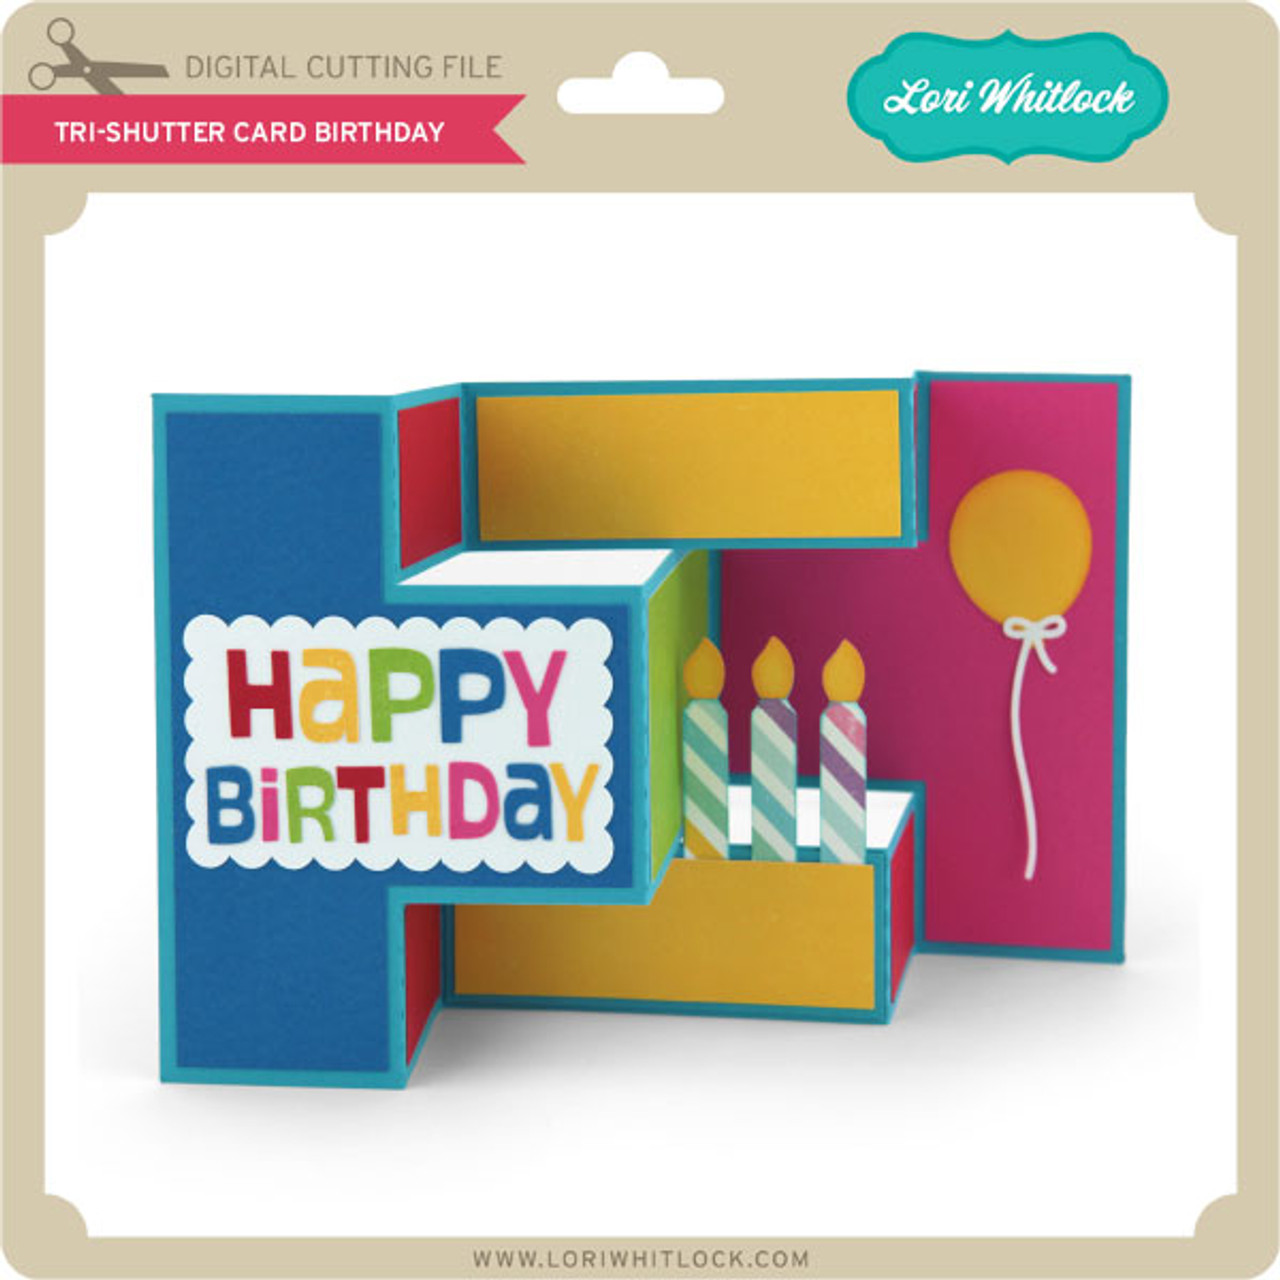 Birthday Stickers - Lori Whitlock's SVG Shop